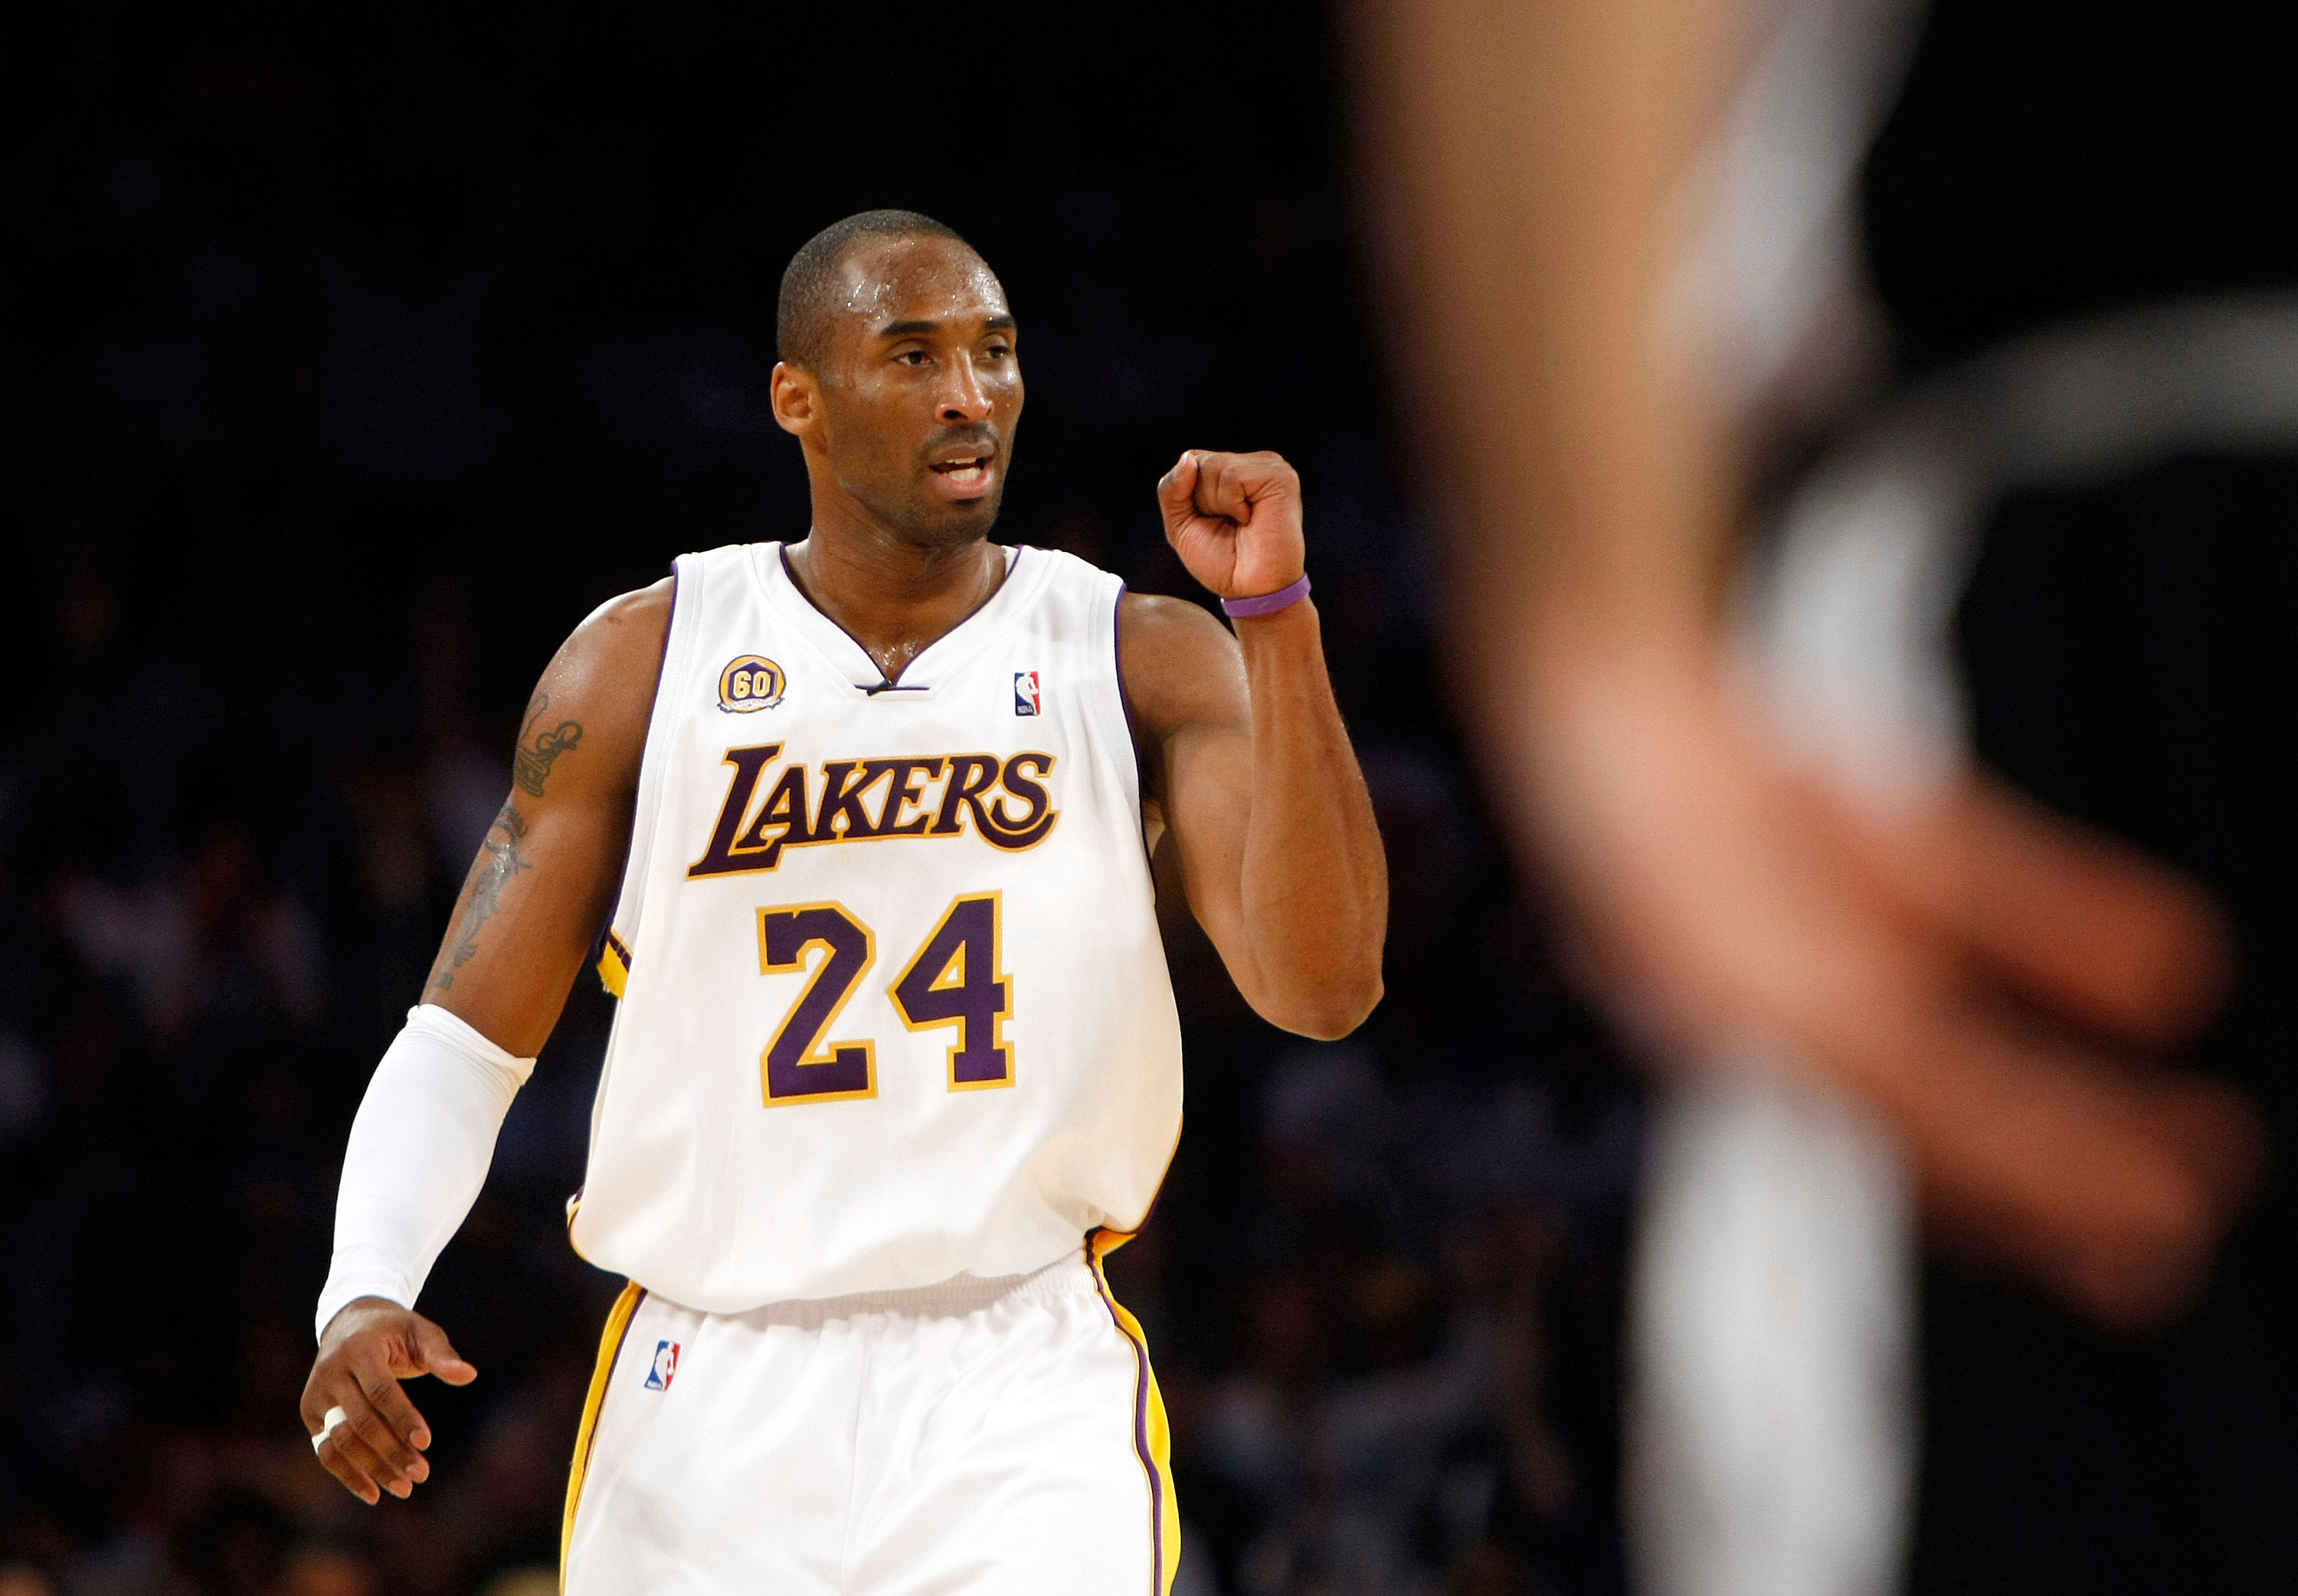 Kobe raising his fist.